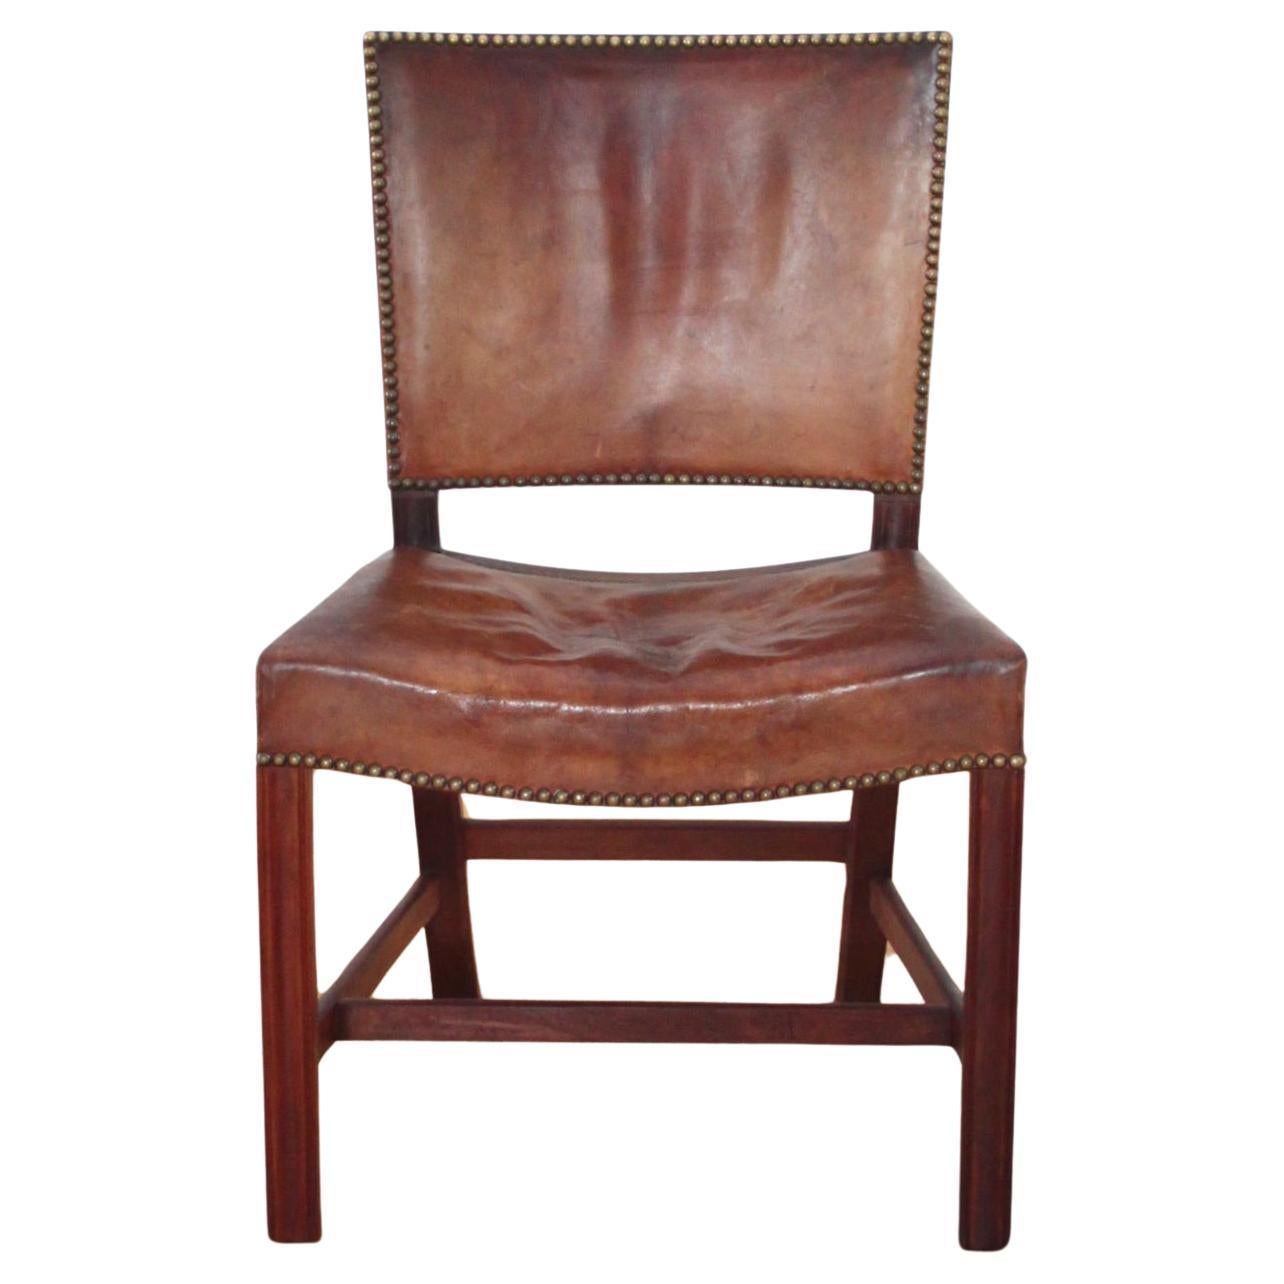 Kaare Klint Roter Stuhl, Rud Rasmussen, Original Niger Leder und Mahagoni-Rahmen im Angebot